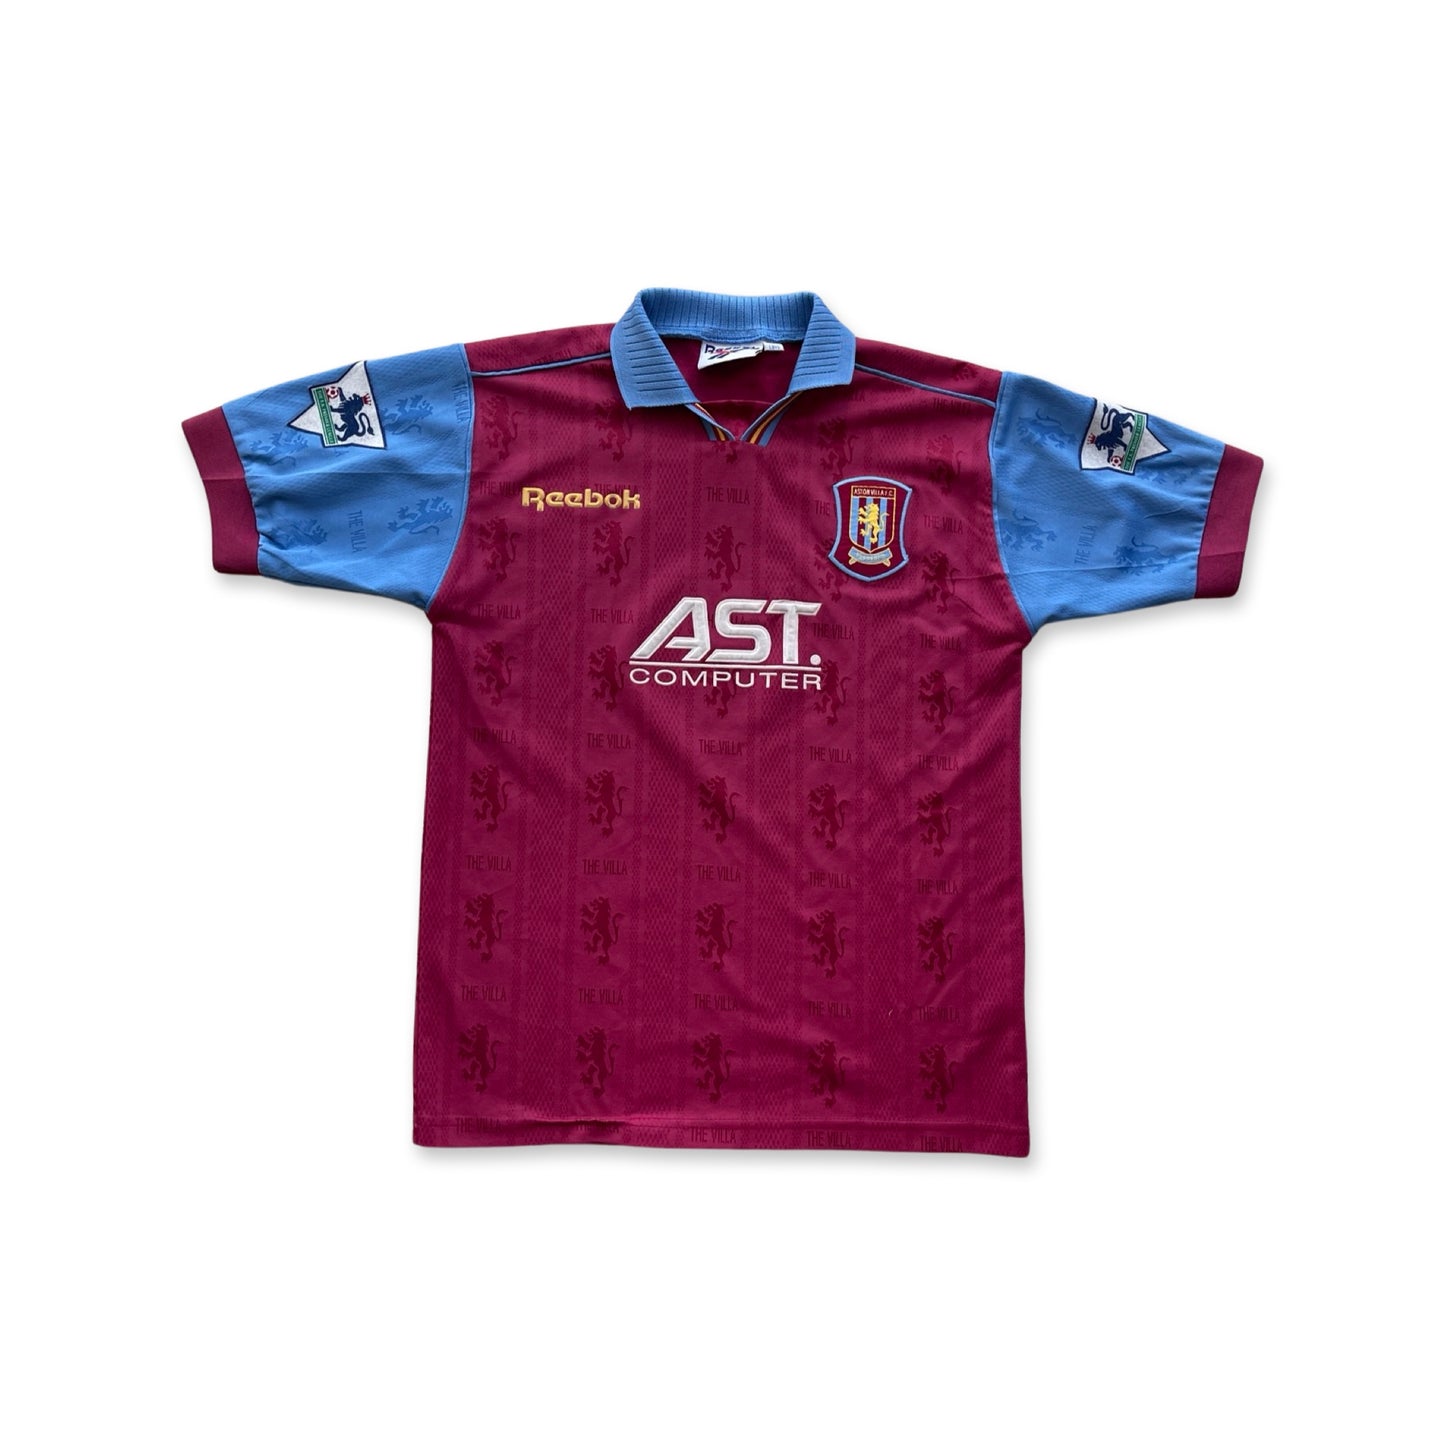 1996 Aston Villa Kit (XSmall) best fit for women's Small